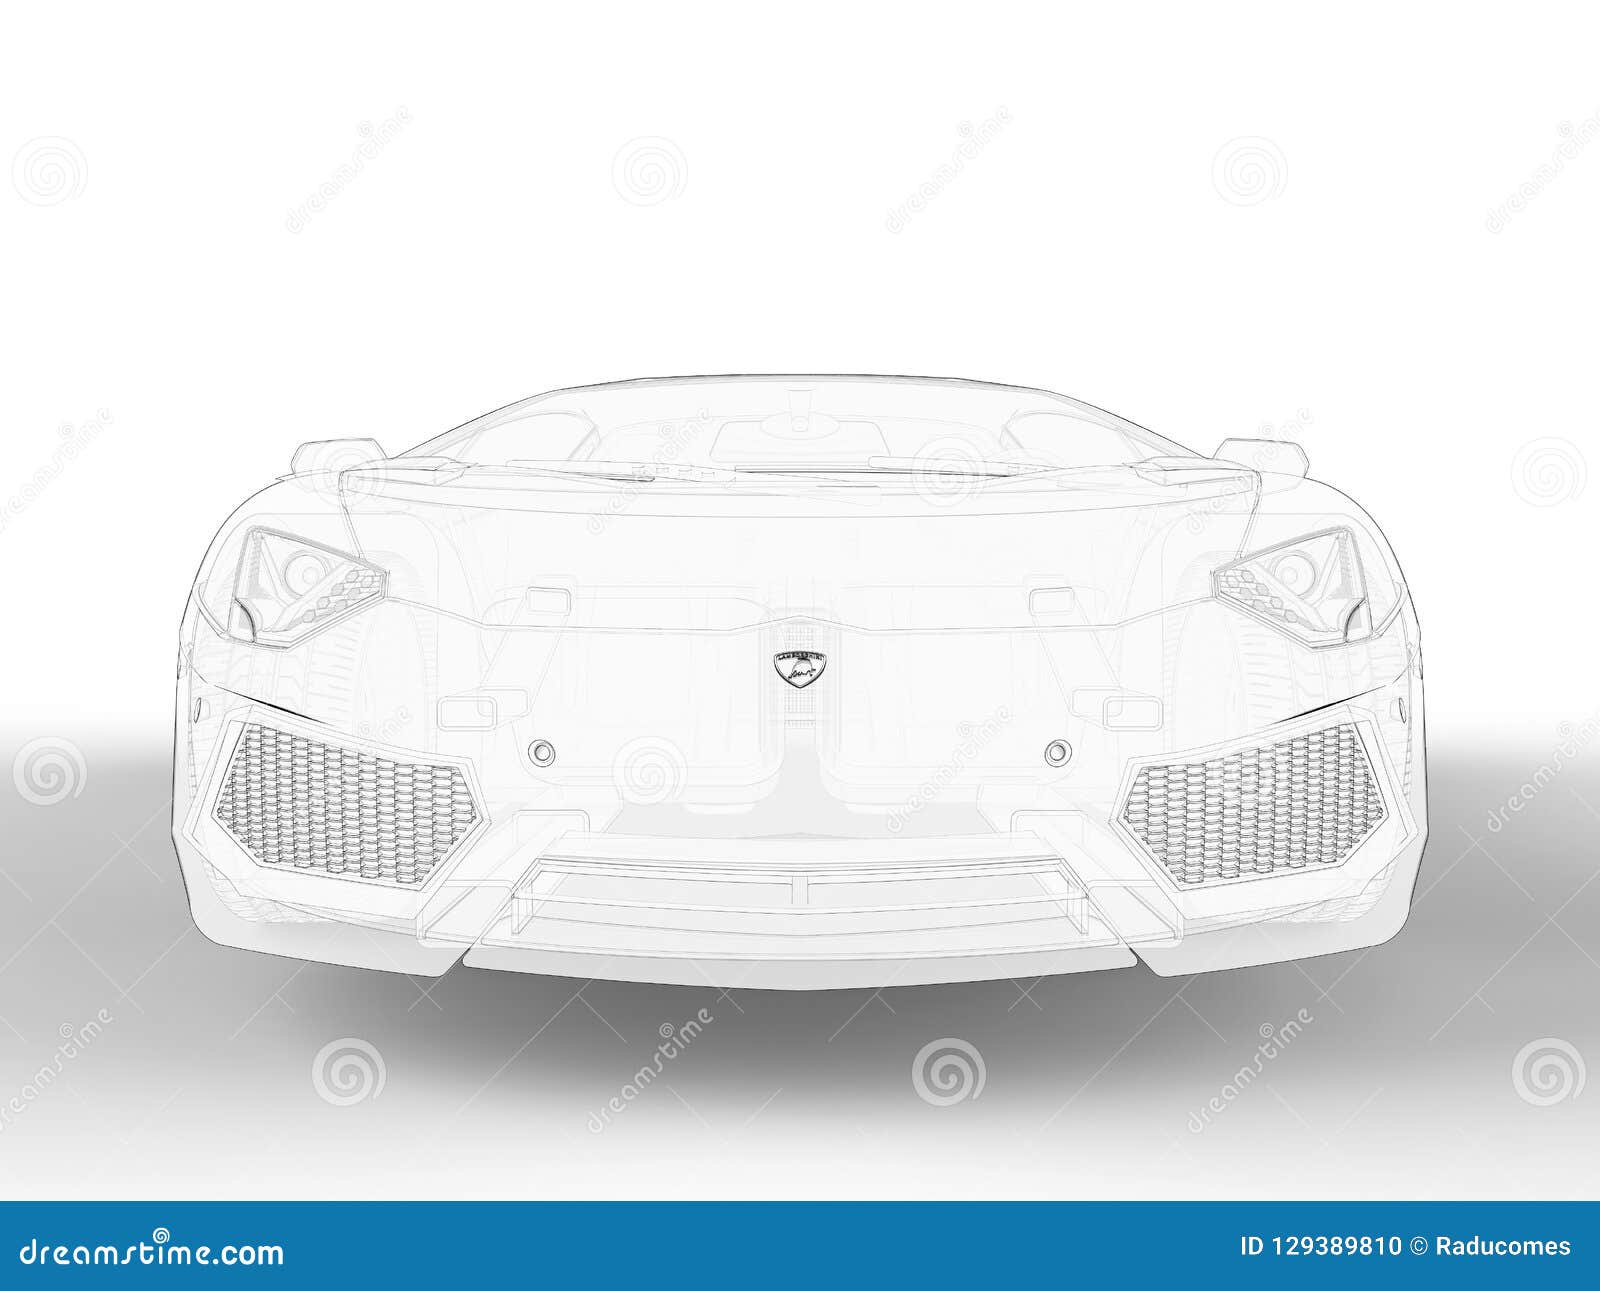 Lamborghini Aventador Front View Sketch Editorial Image ...